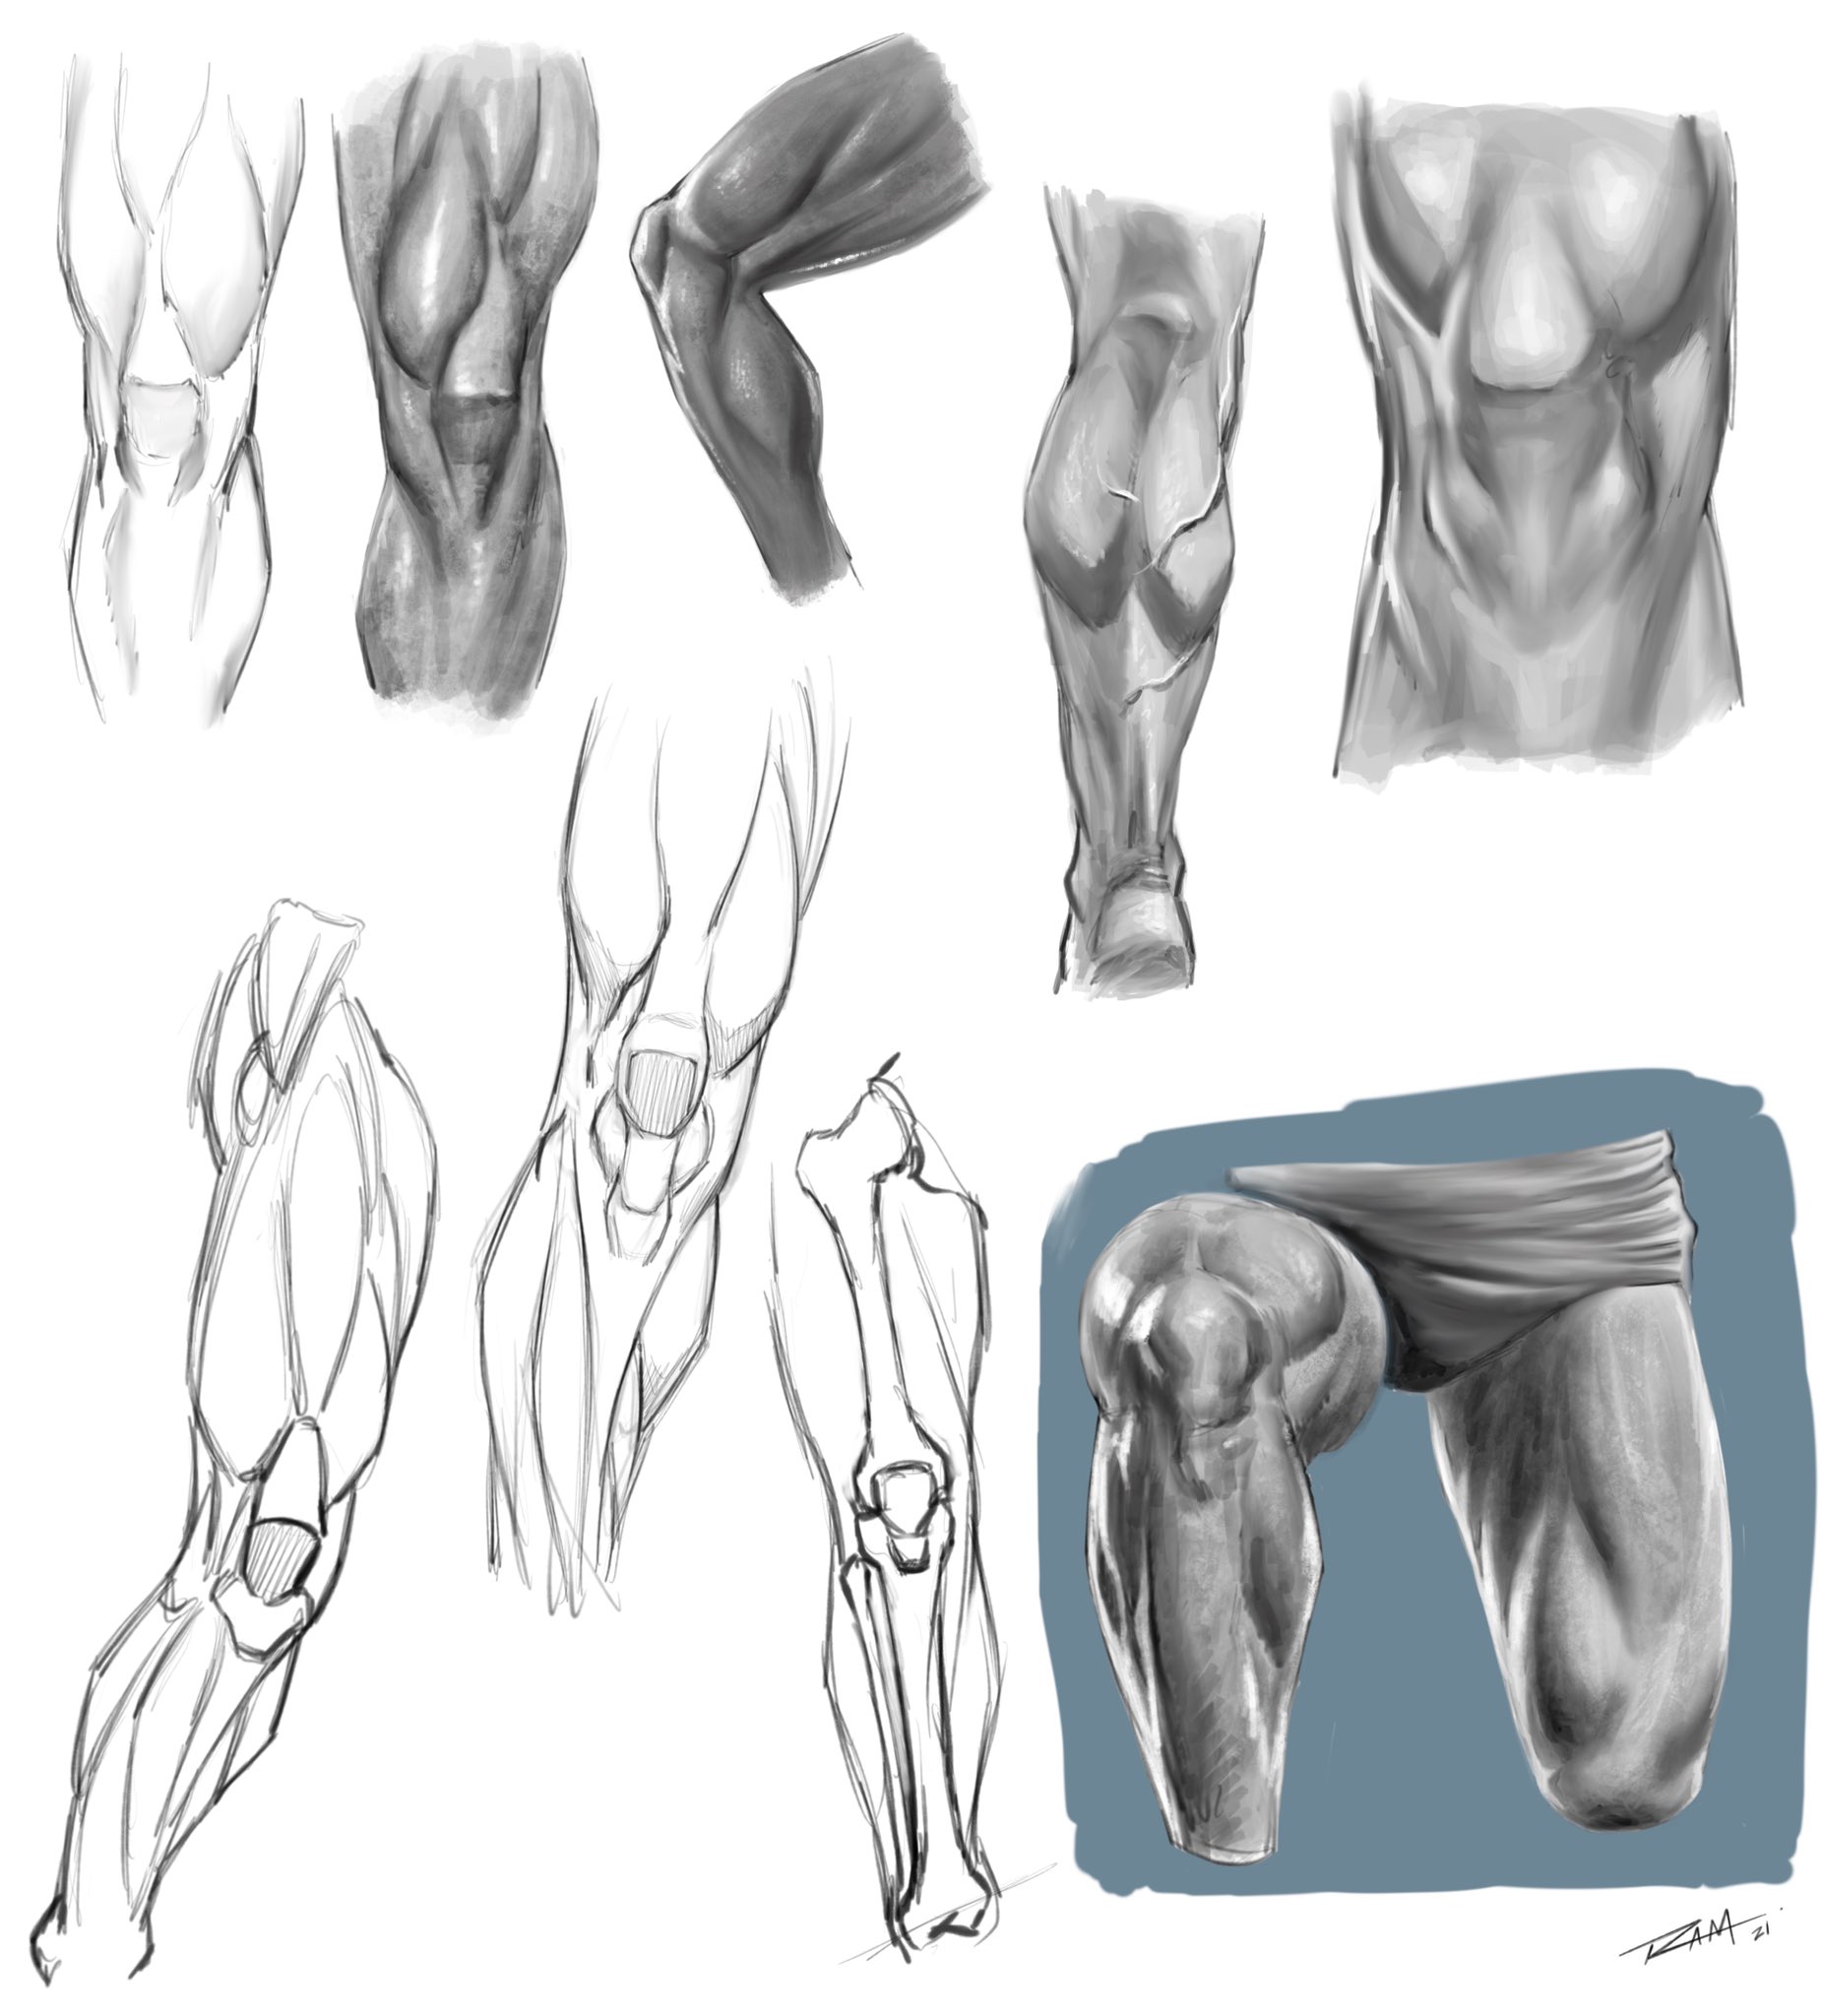 Leg Muscle Drawings | Drawings, Mermaid artwork, Human anatomy art